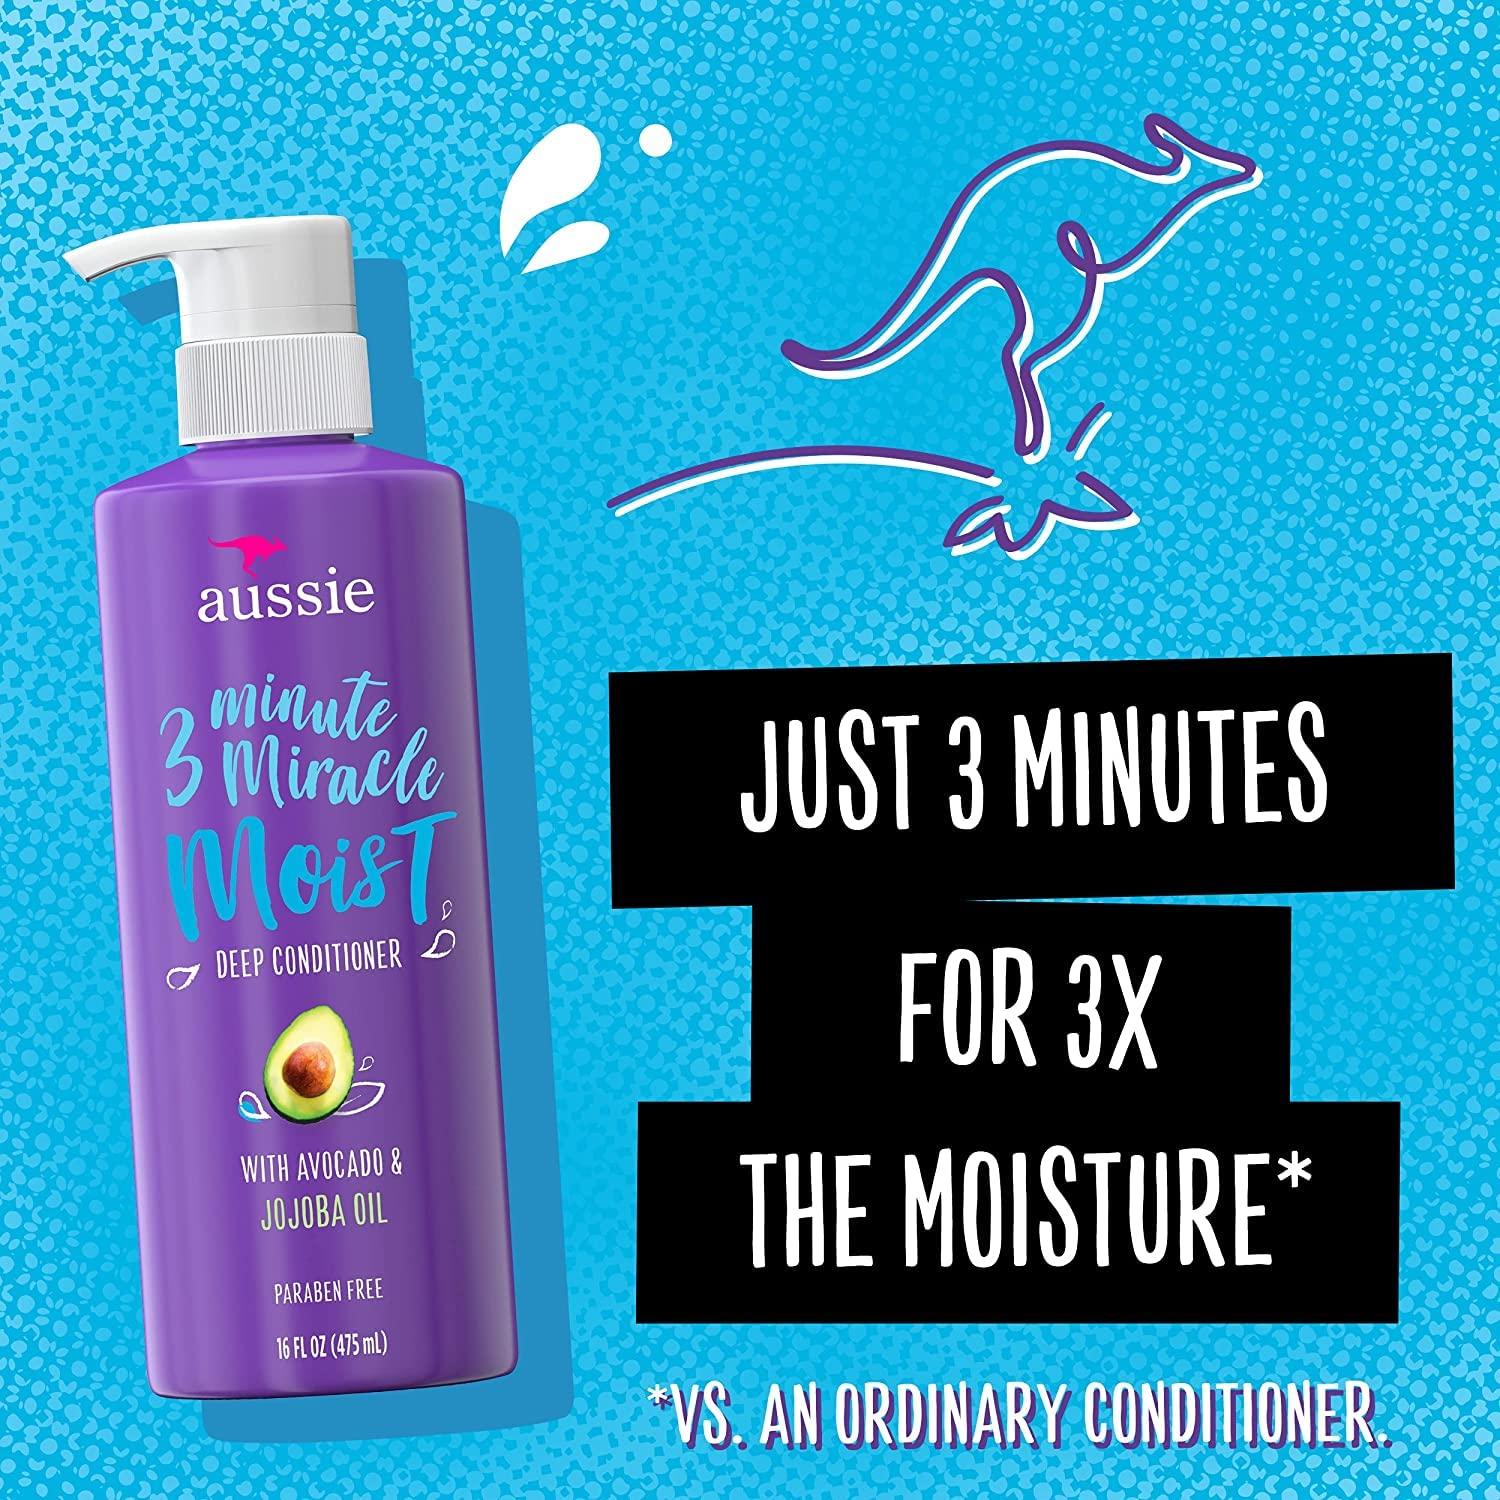 Aussie Miracle Moist Shampoo and Conditioner Hair Set, 26.2 fl oz